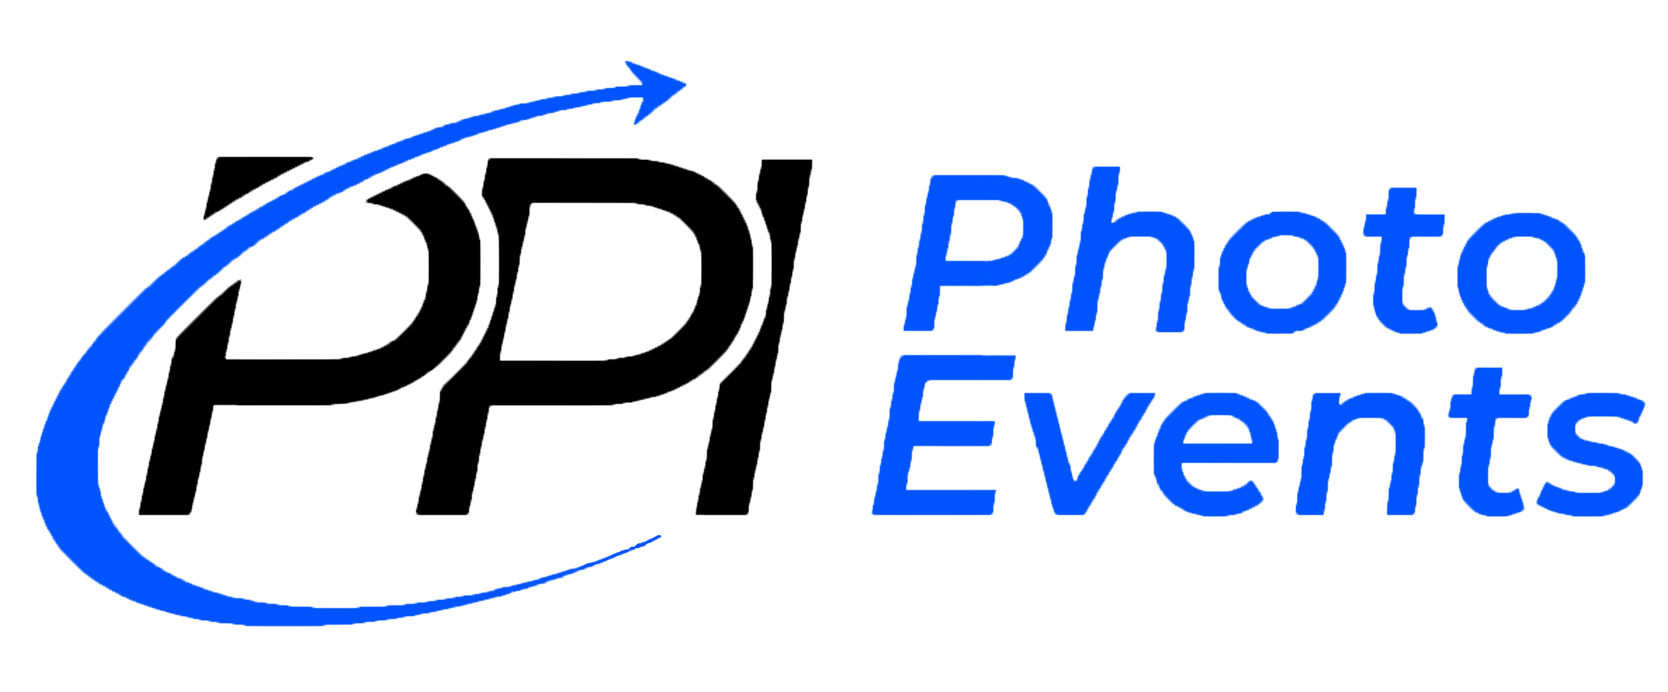 PPI Photo Events logo